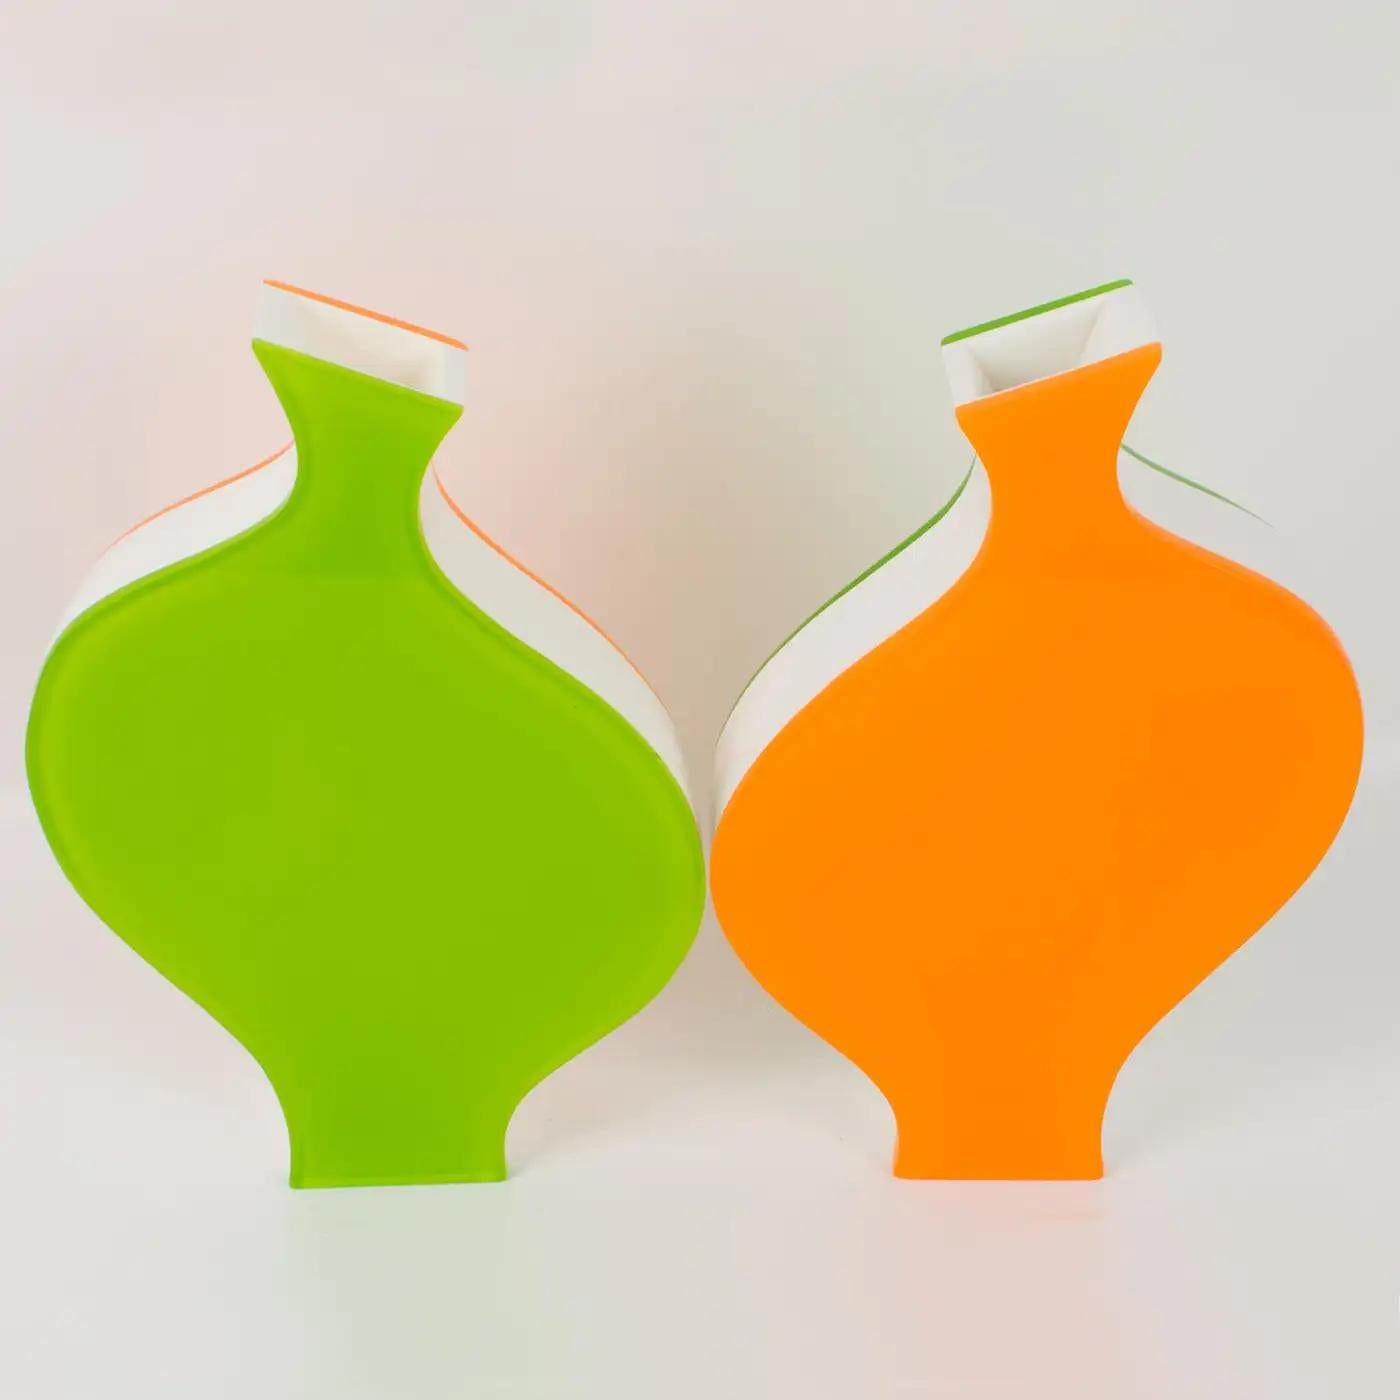 Villeroy & Boch Orange and Green Lucite Vases, 1990s For Sale 3